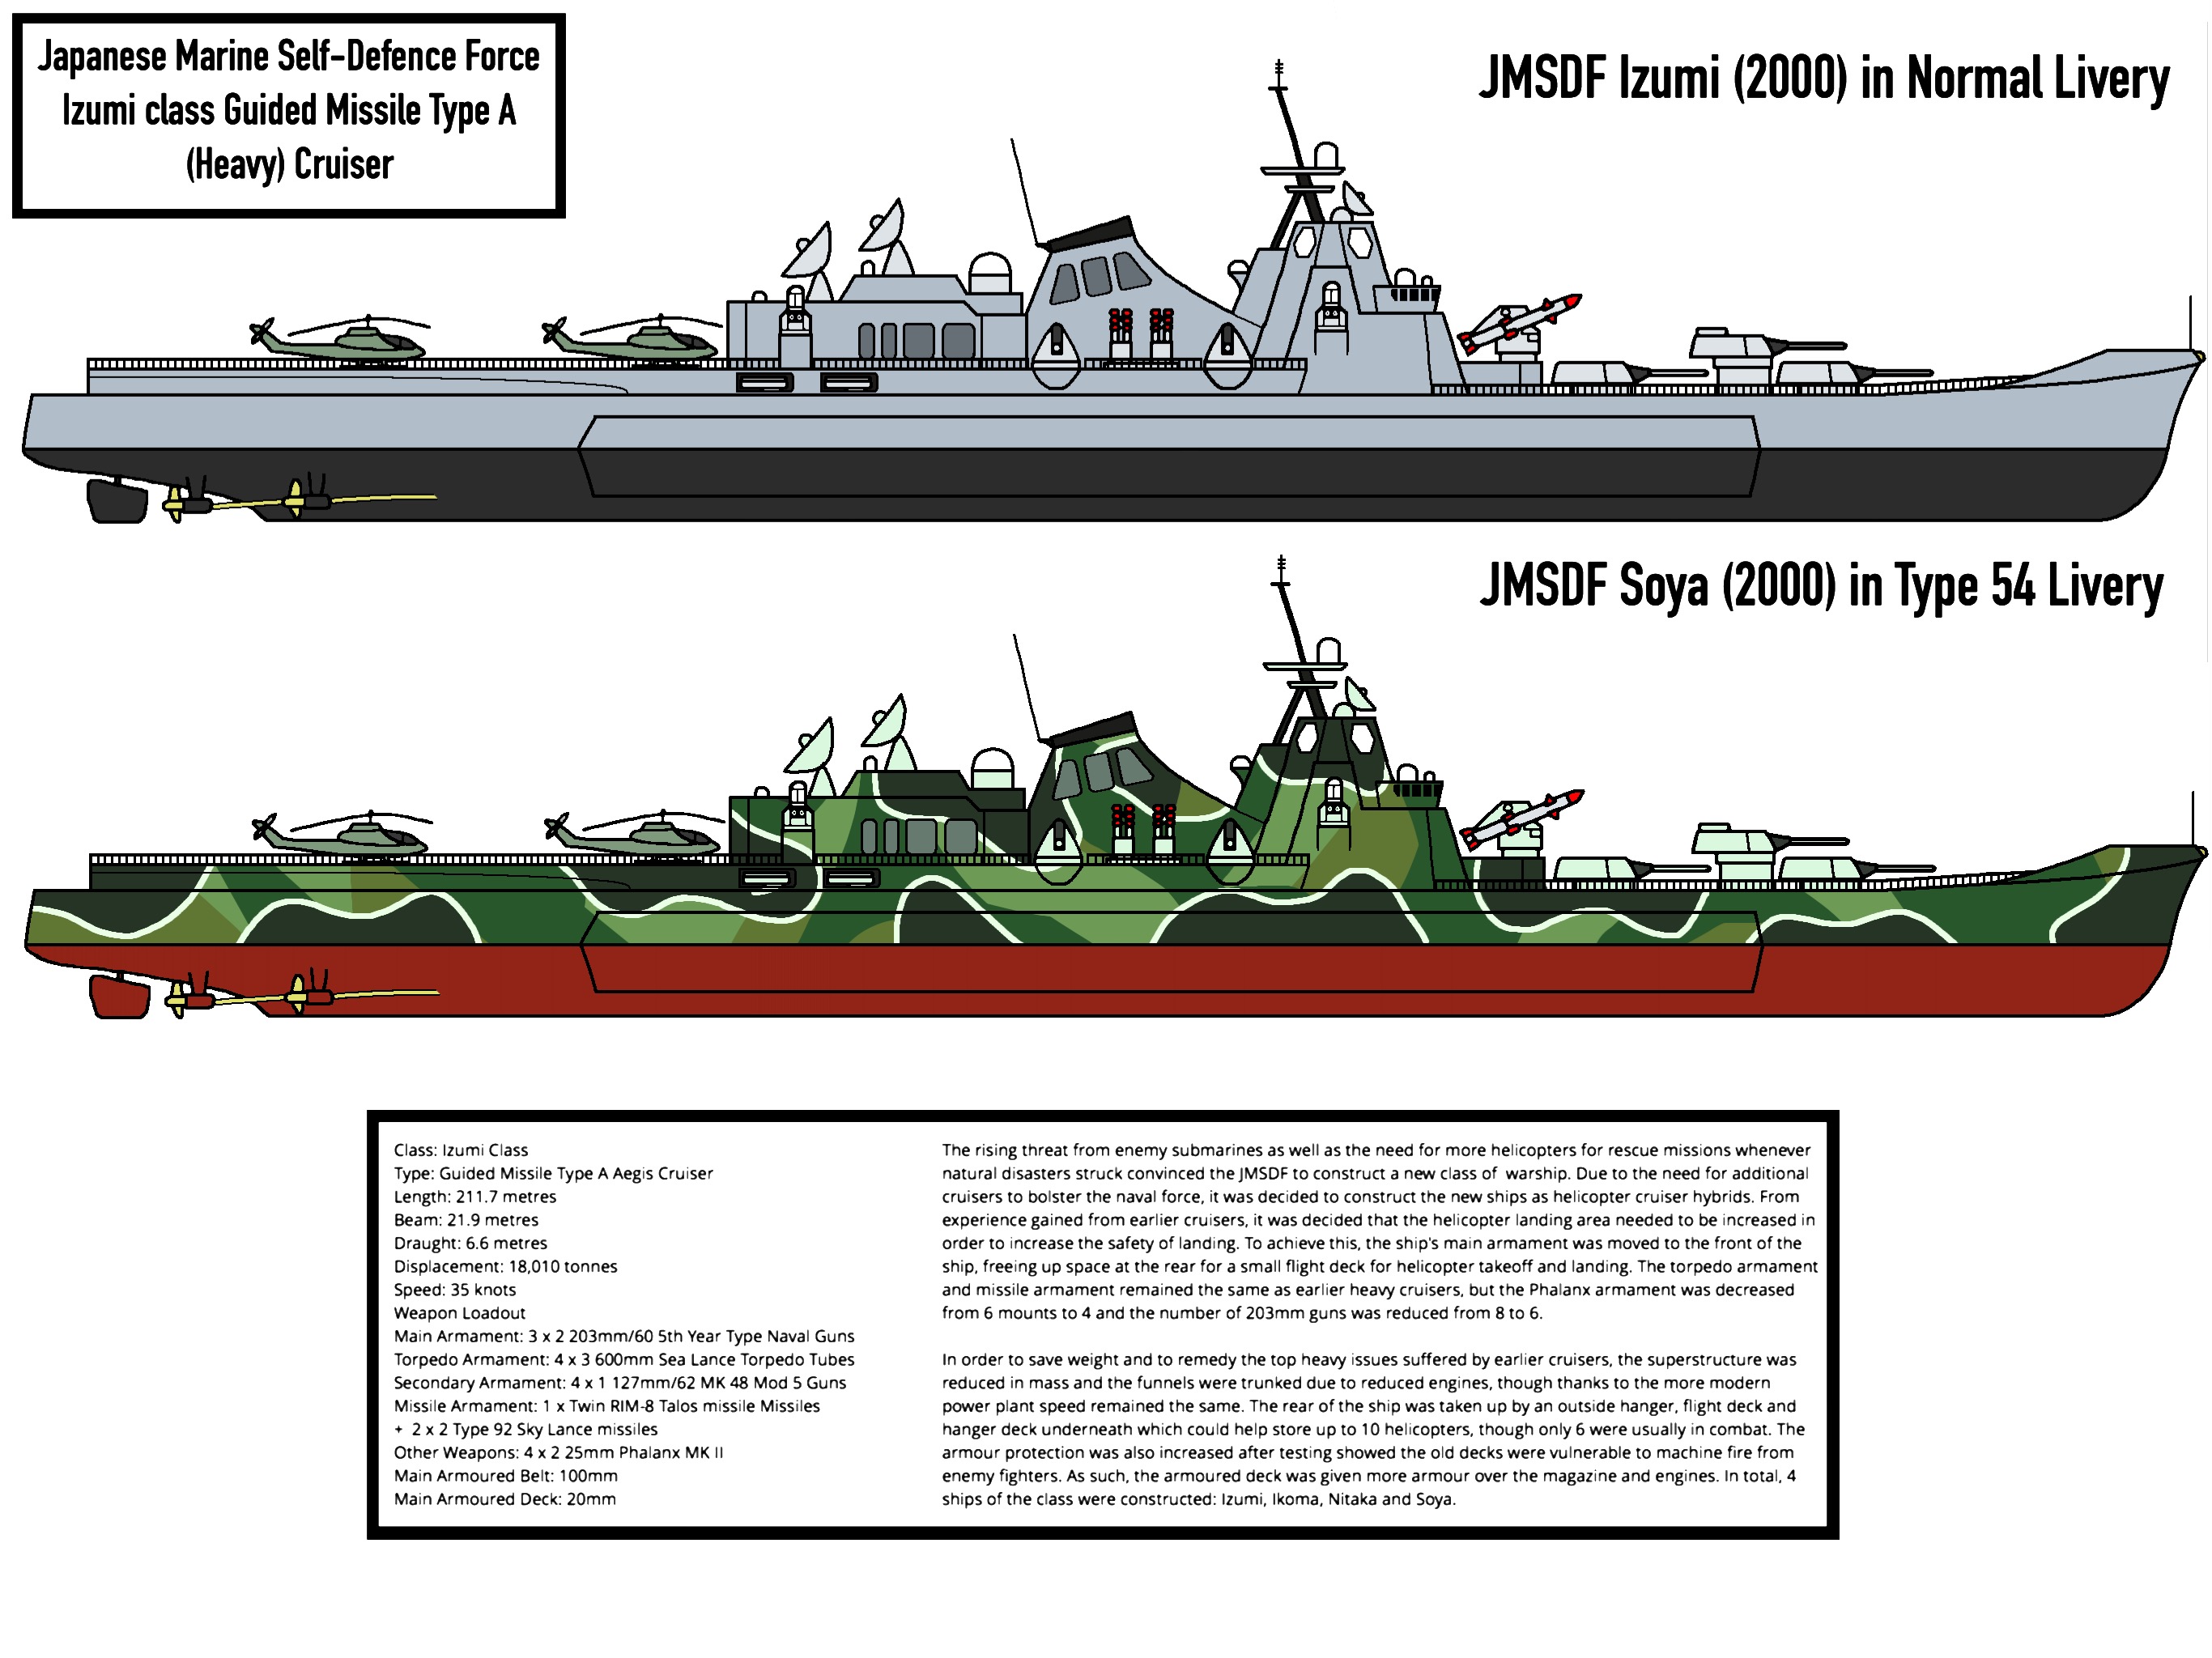 Fog Space Battleship Kodai by JNSDF-Kozuke on DeviantArt